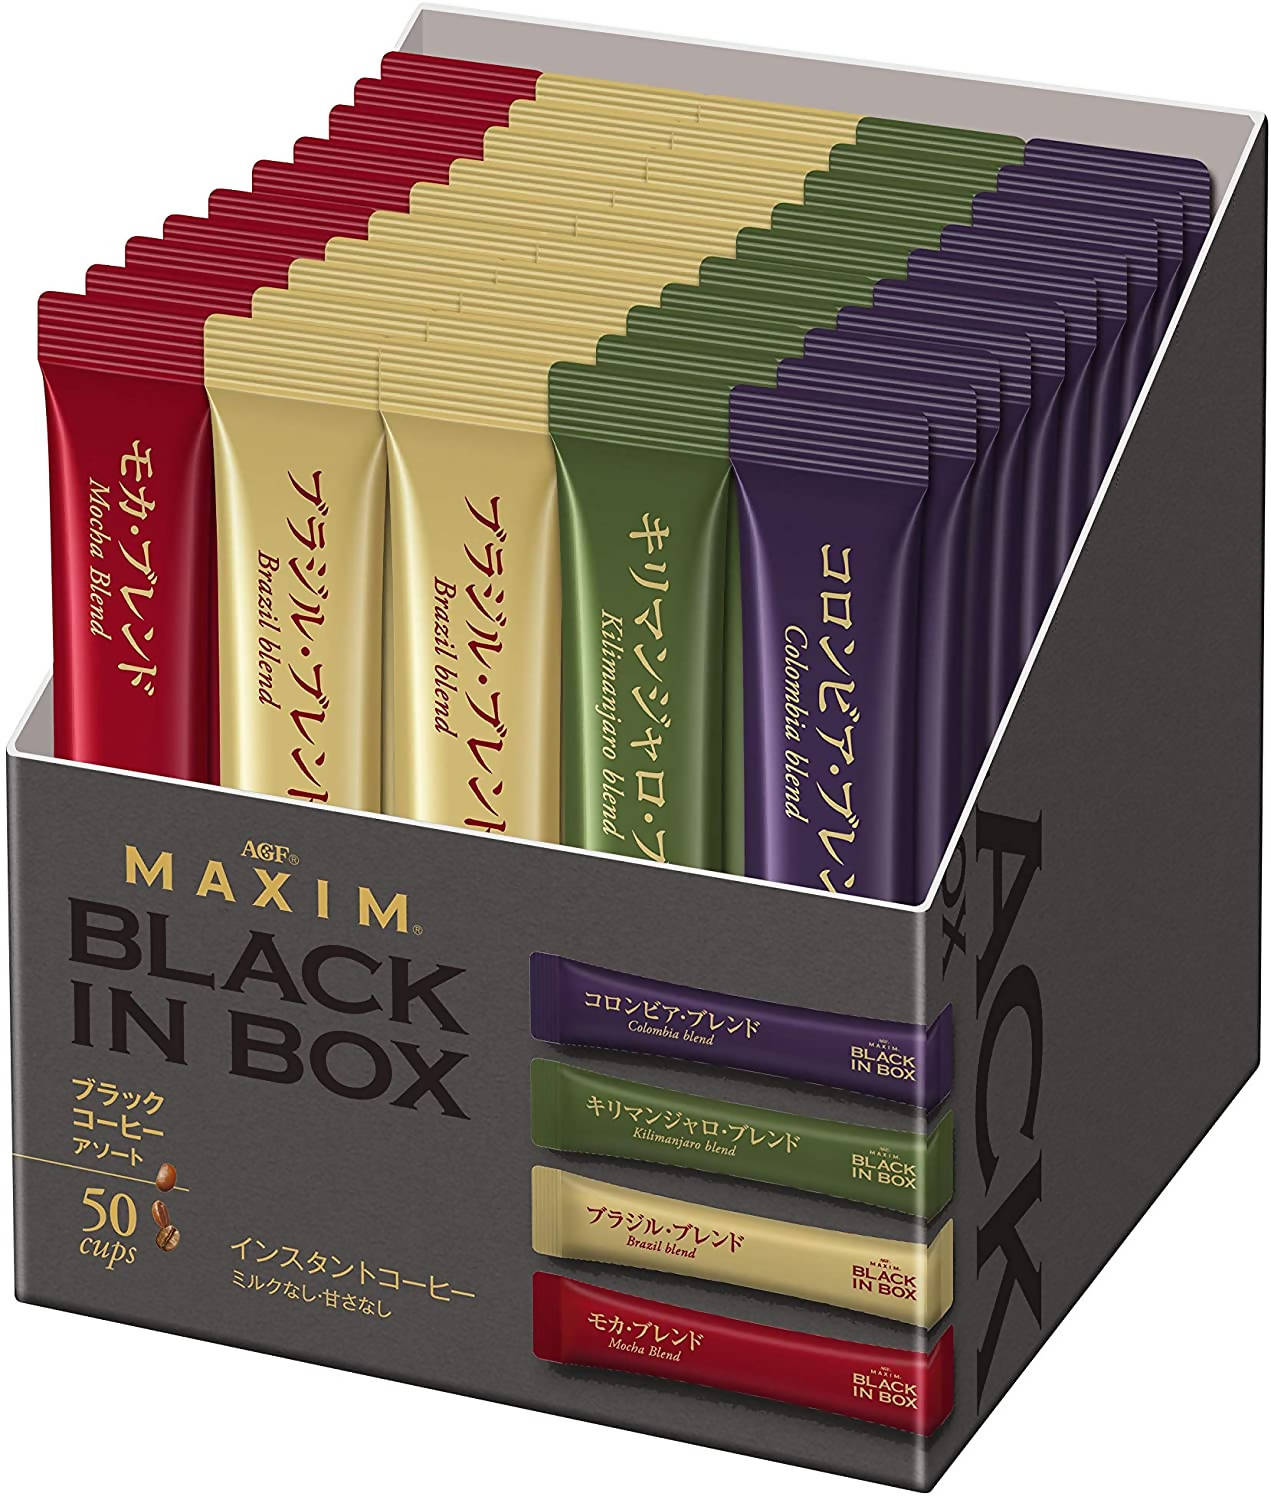 AGF Maxim Black Instant Coffee Stick Box – 50 Assorted Sticks